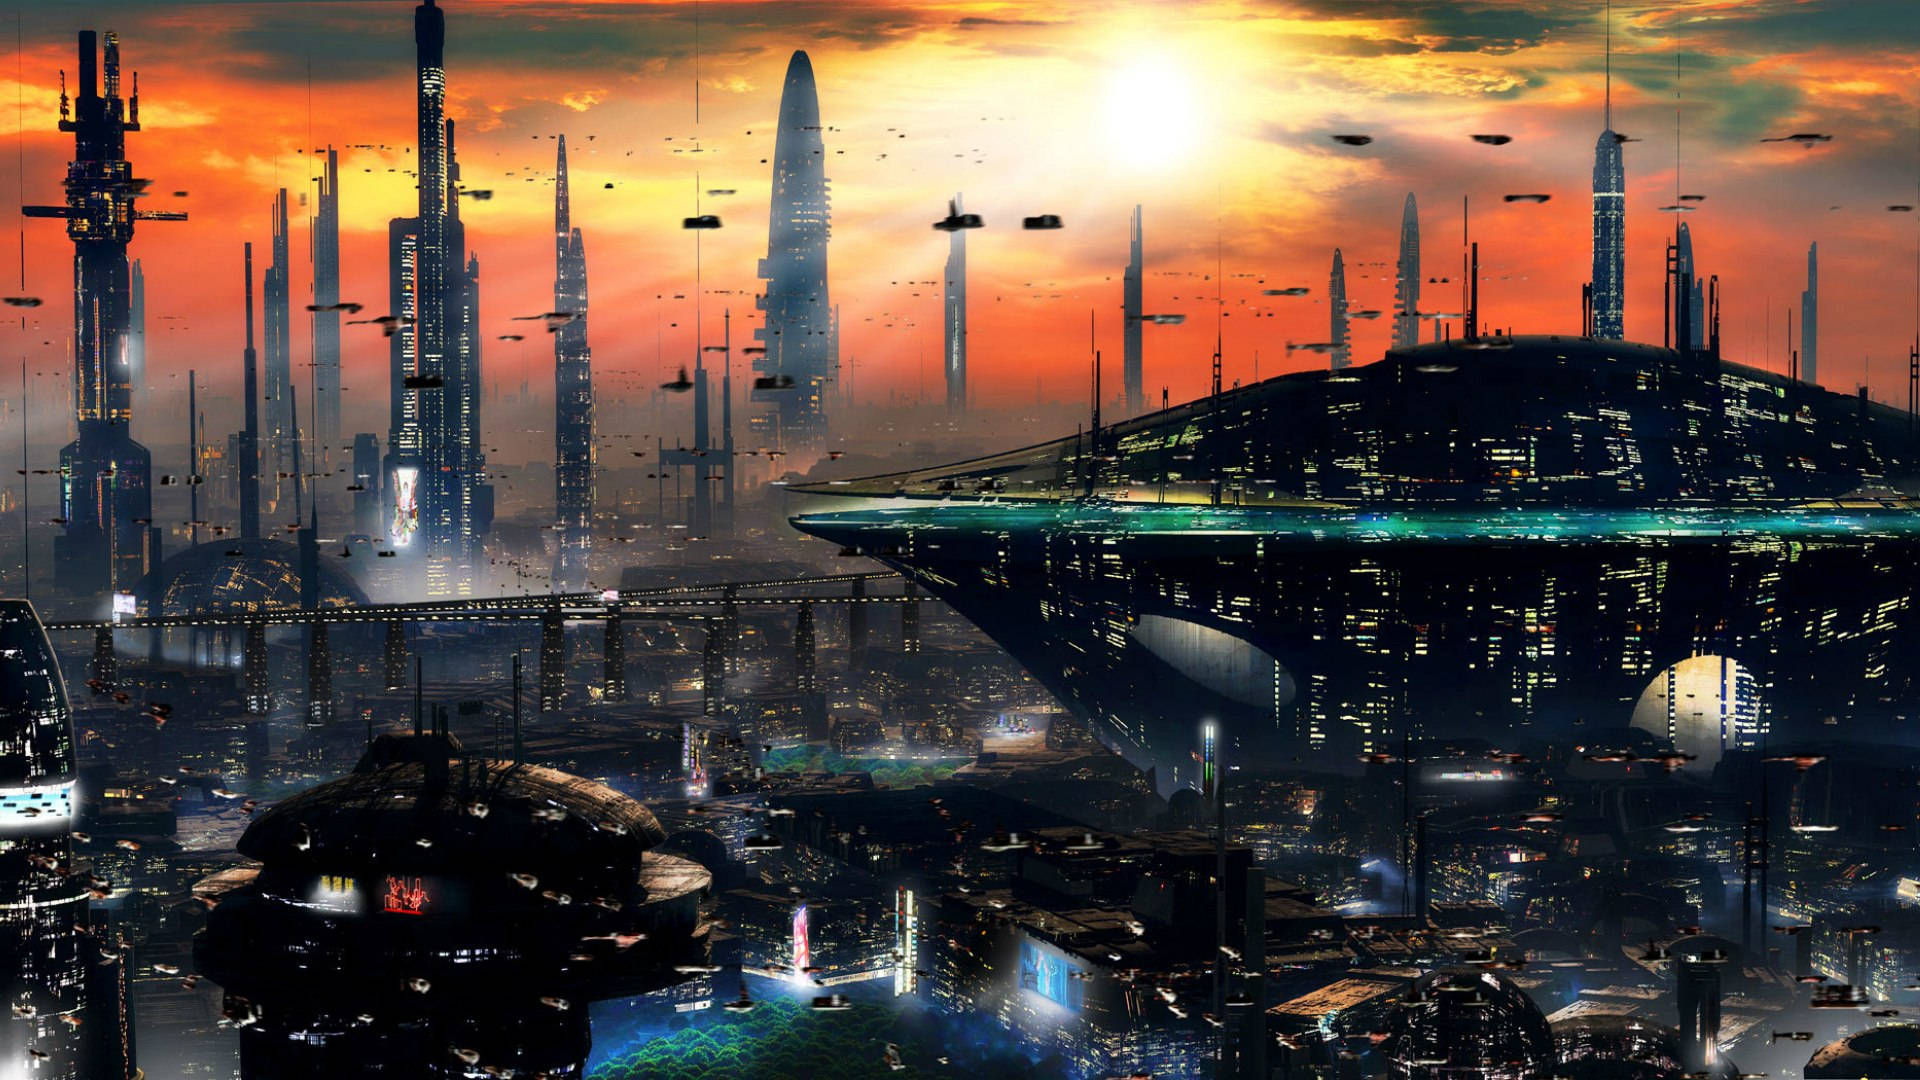 Sci Fi City Art Background